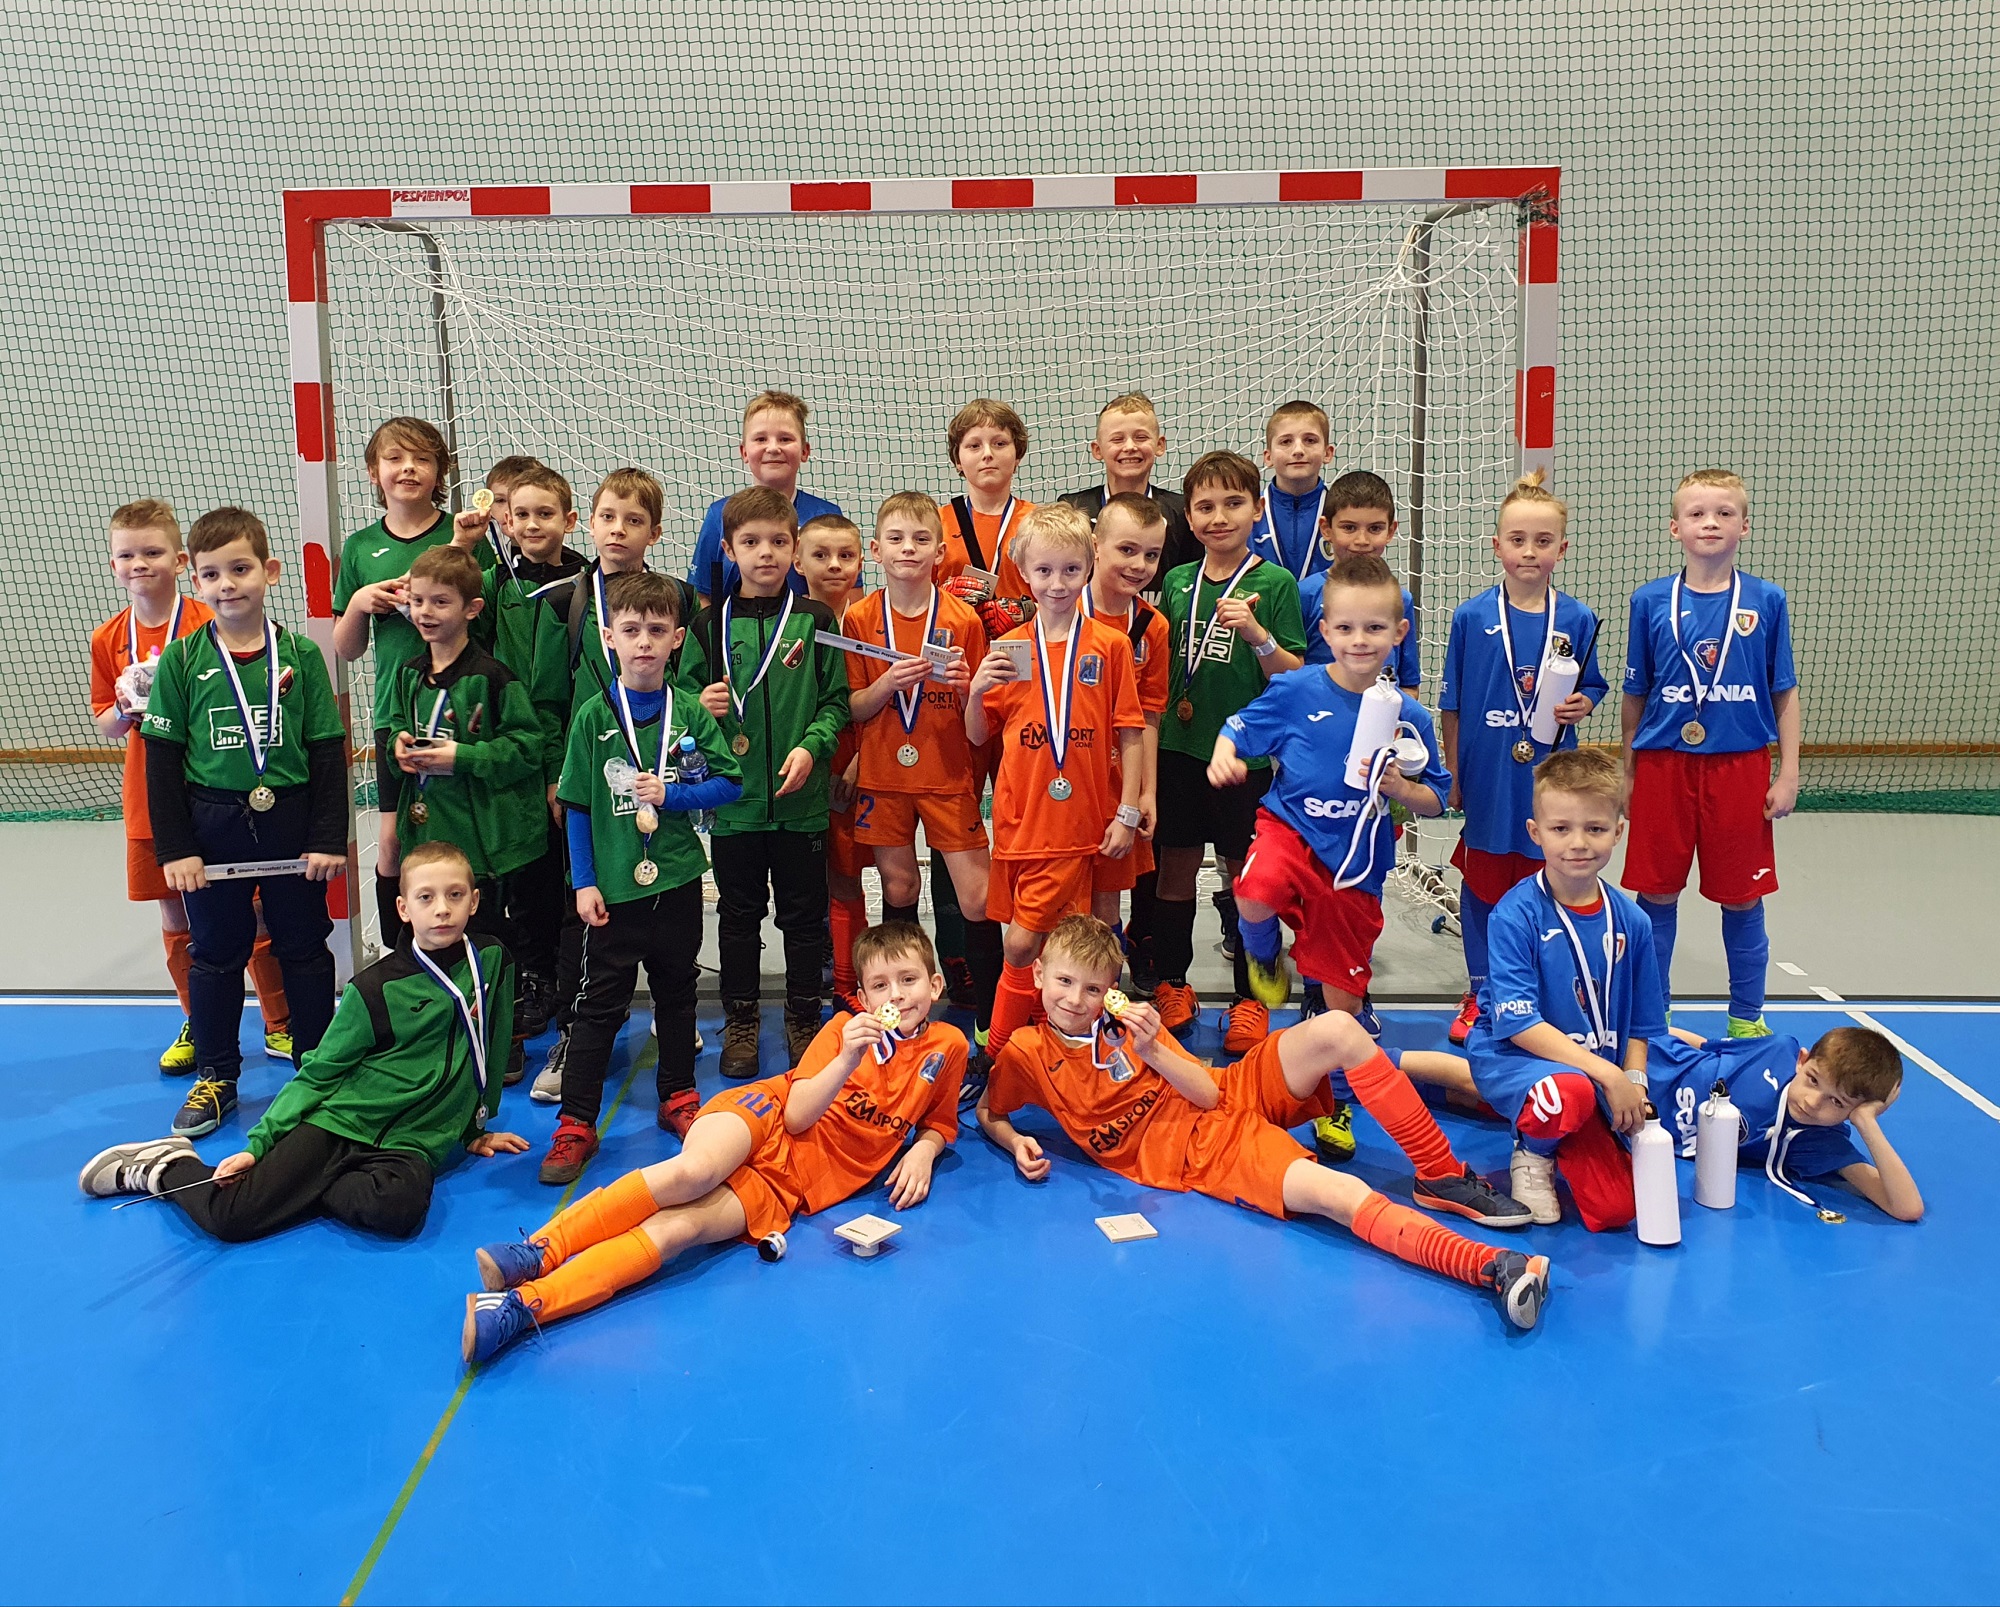 Akademia Futsalu Piasta Gliwice triumfuje